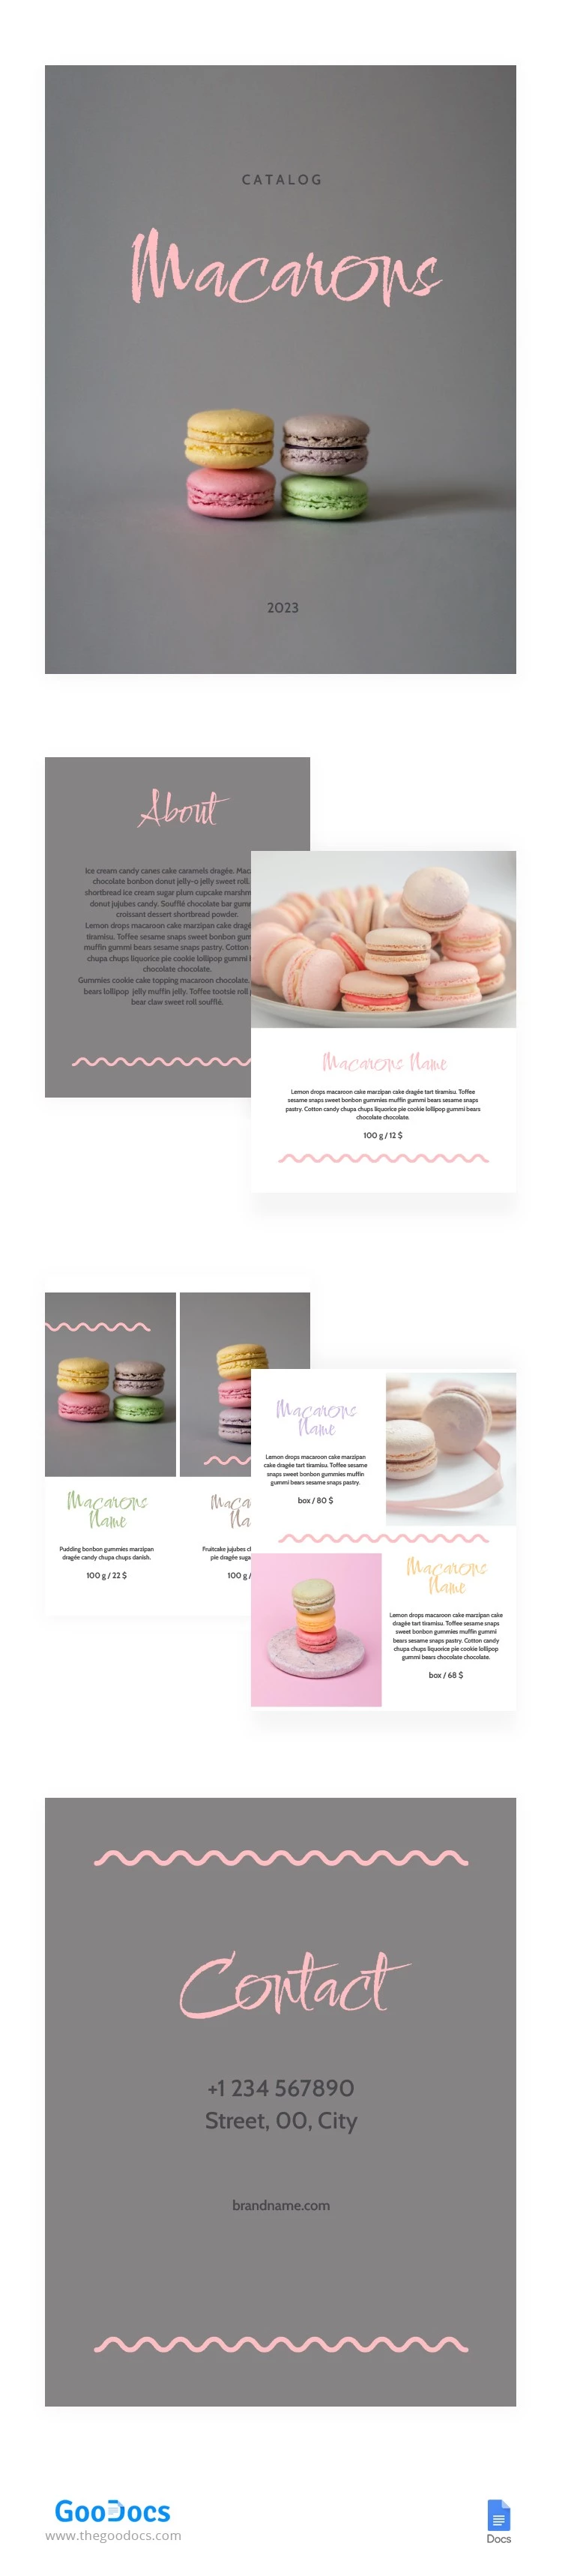 Catalogue de mignons macarons - free Google Docs Template - 10064019